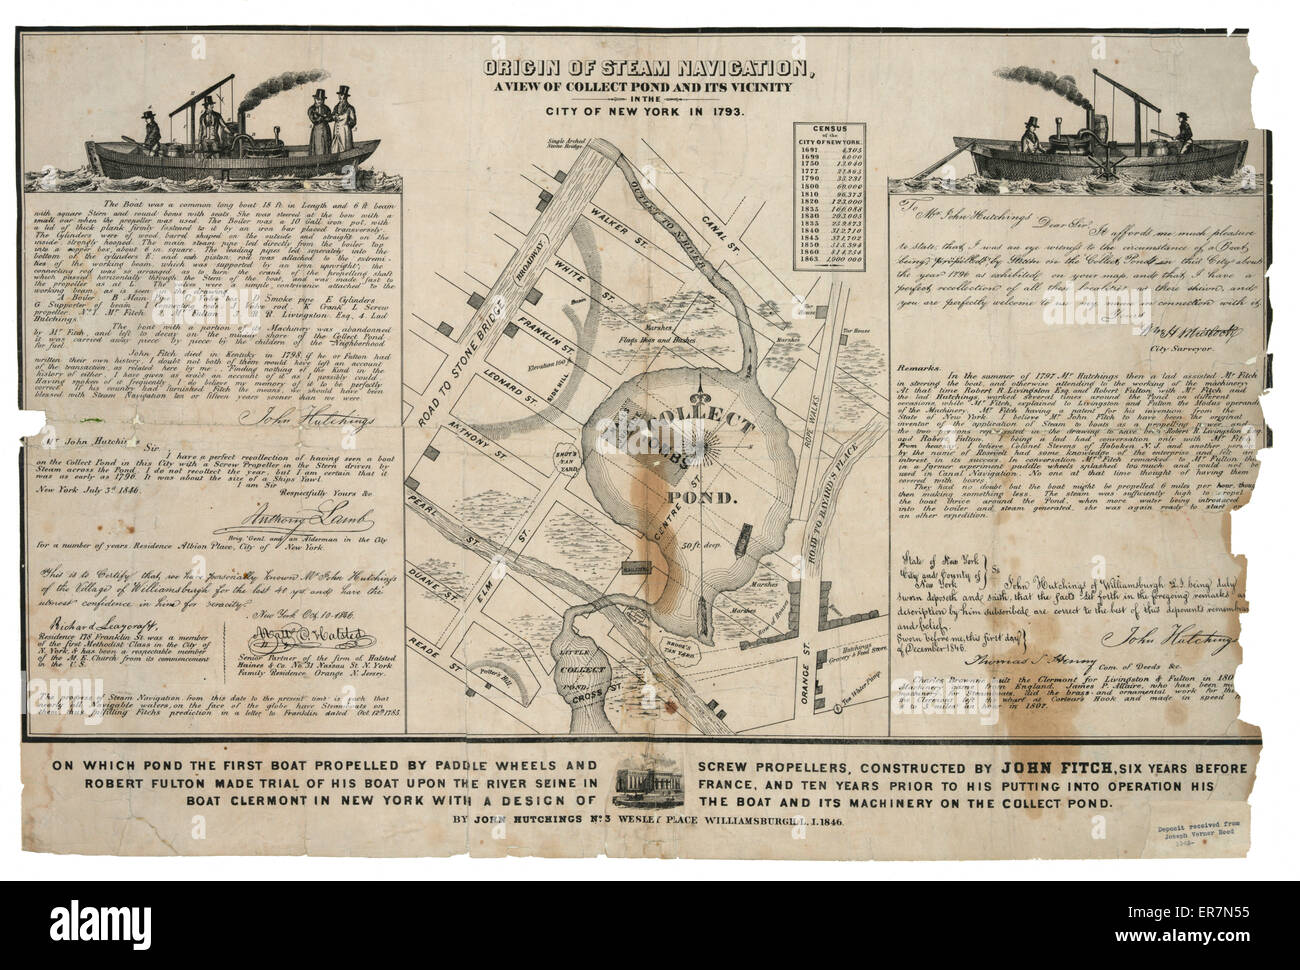 Origin of steam navigation.. Stock Photo